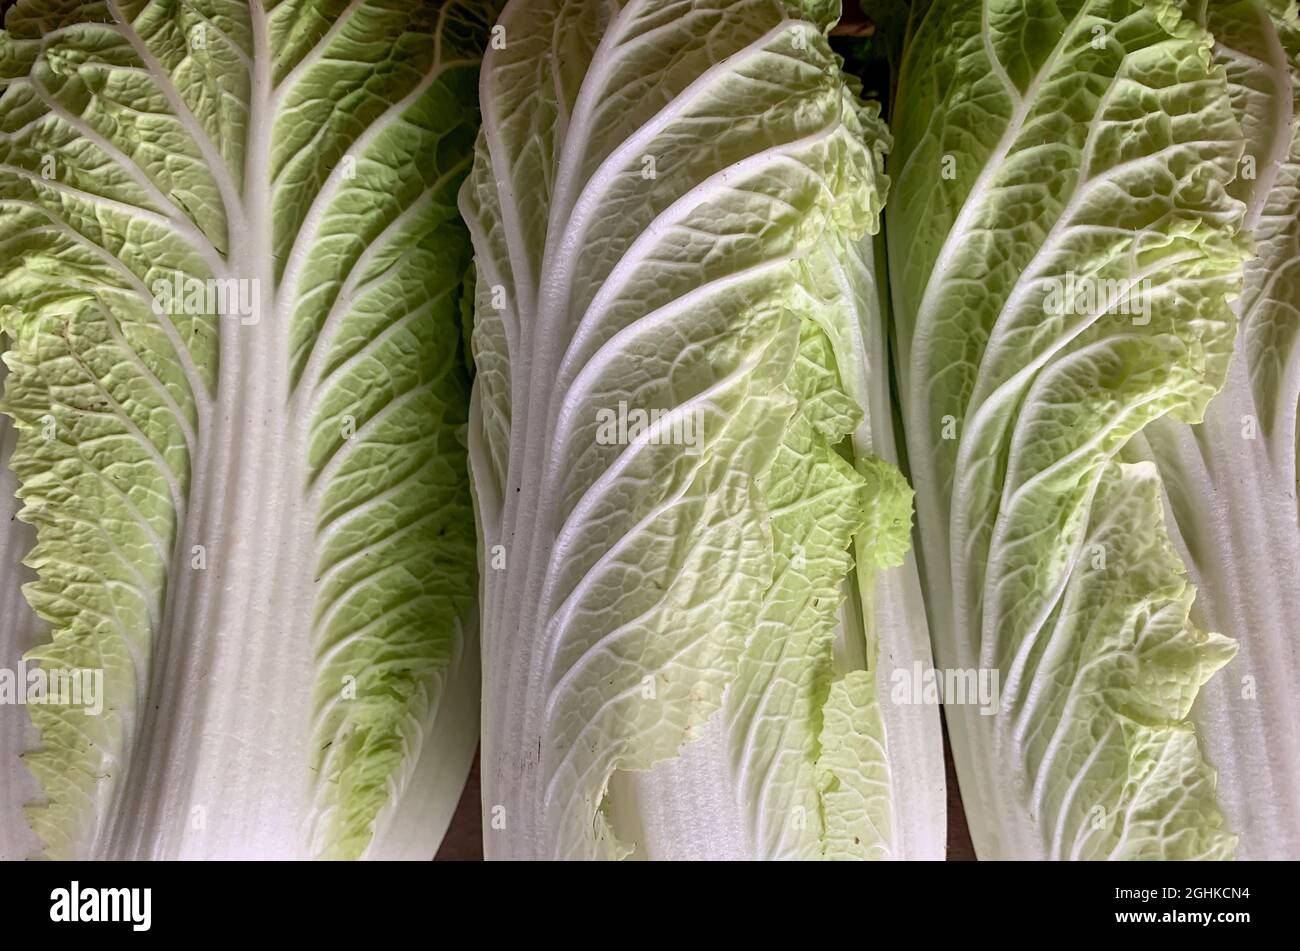 Fresh Nappa cabbage or Chinese cabbage (Brassica pekinensis) Stock Photo